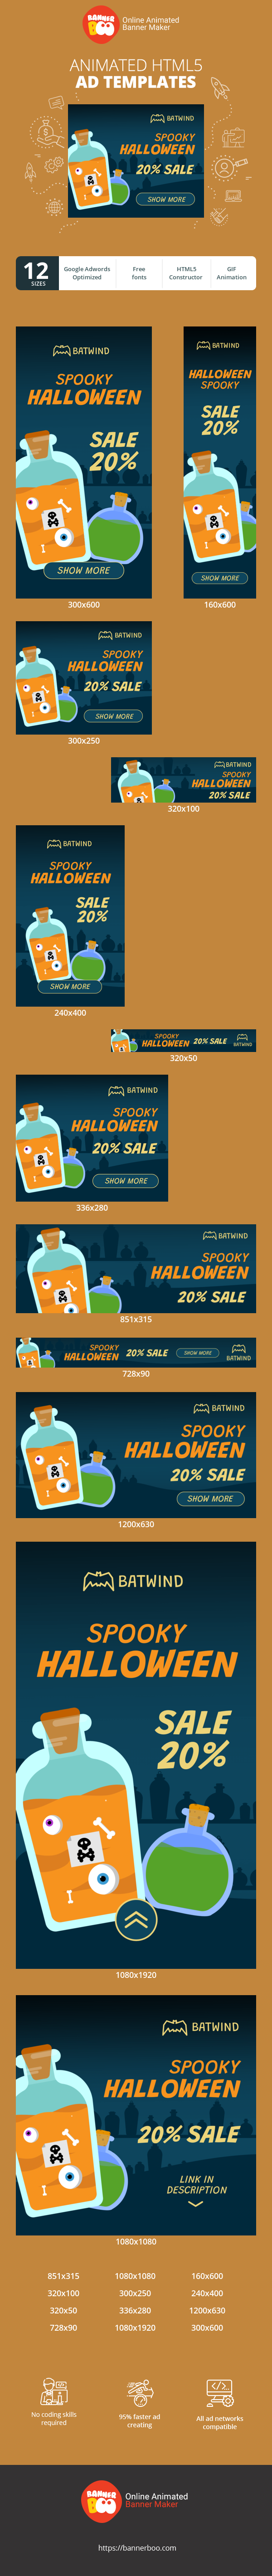 Spooky Halloween — 20% Sale